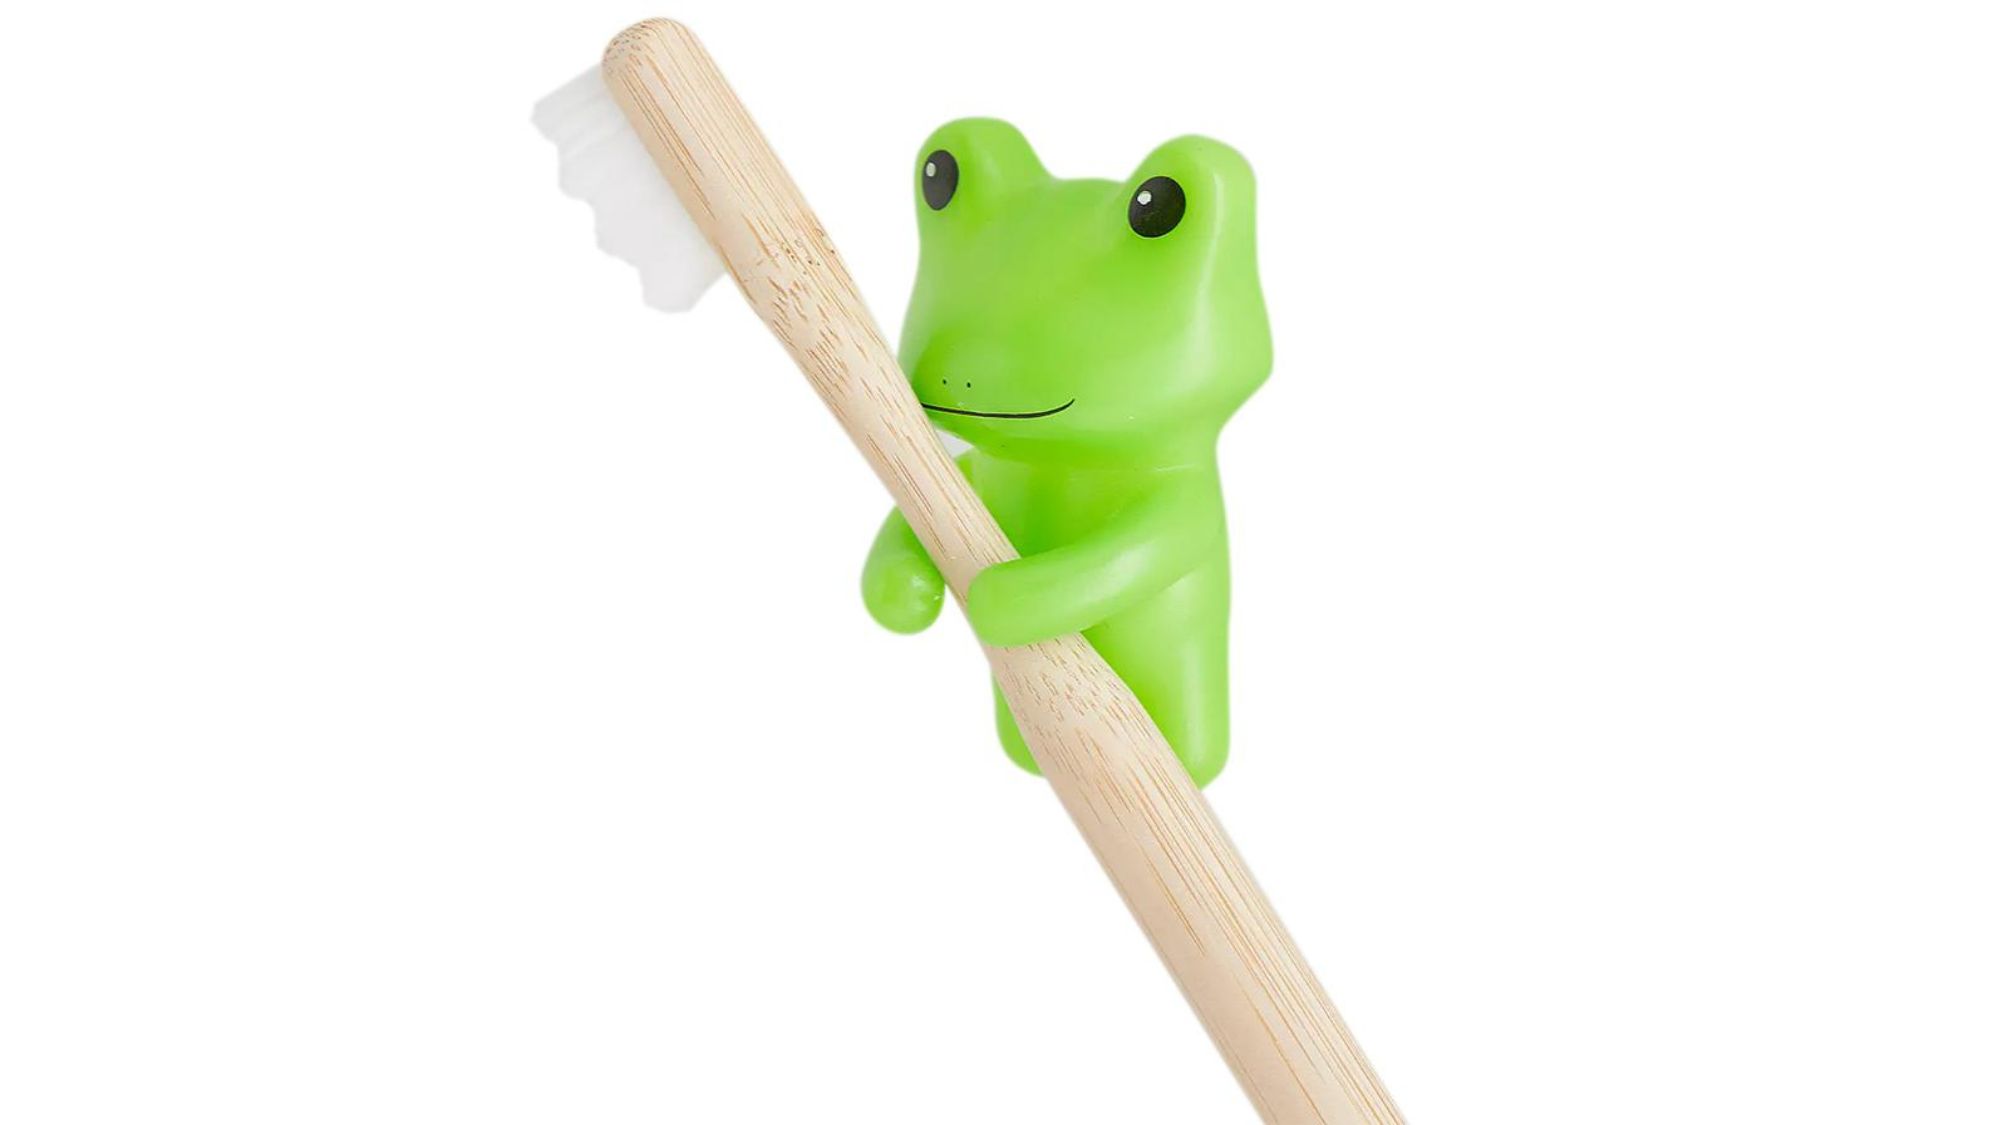 Frog toothbrush holder